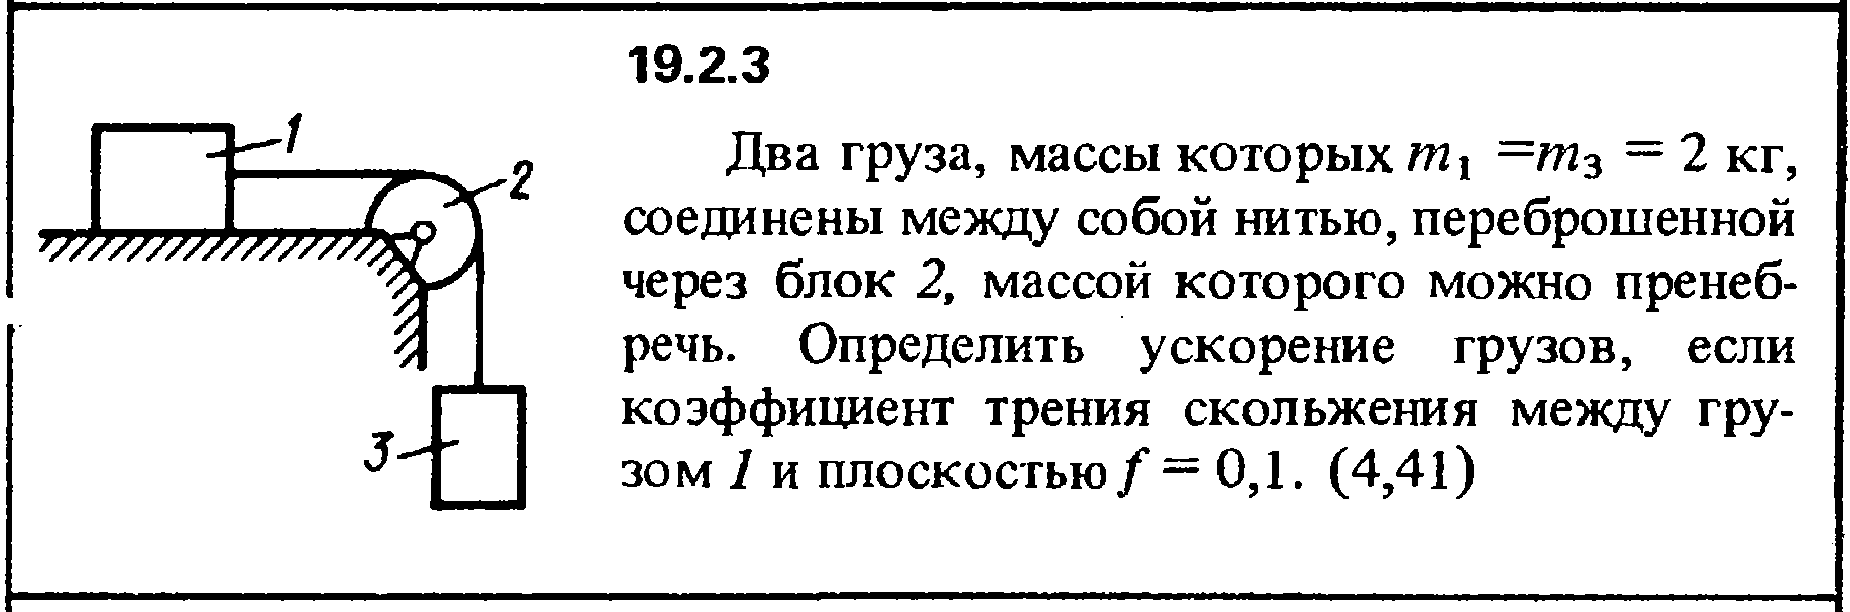 Решение 19.2.3 из сборника (решебника) Кепе О.Е. 1989